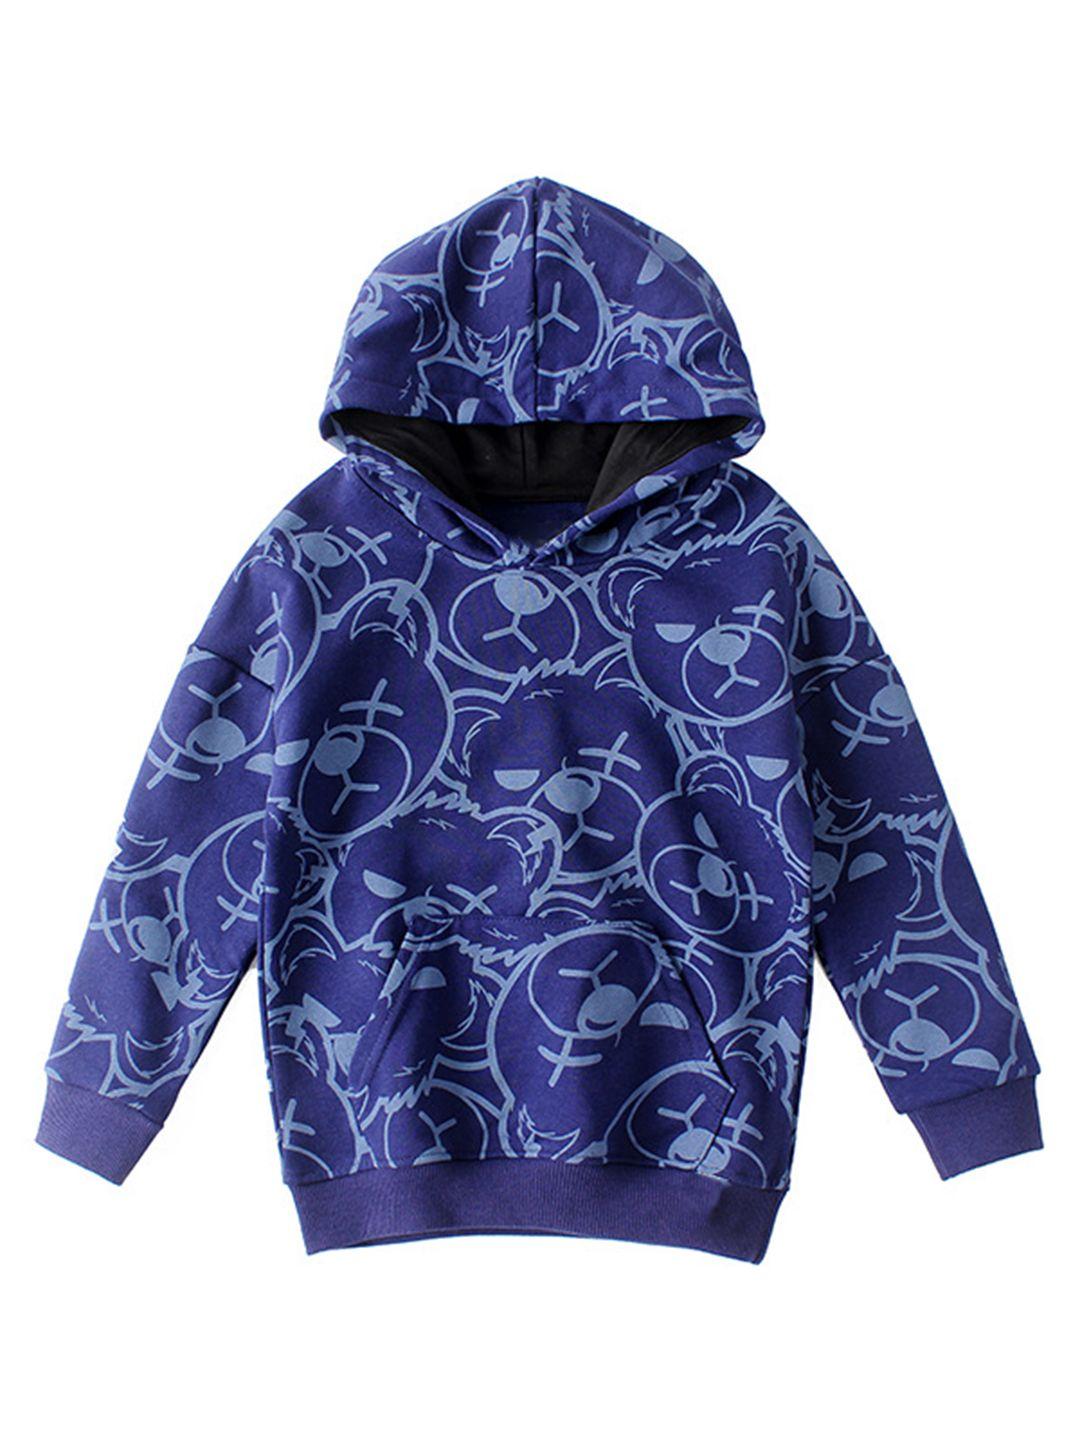 stylecast-boys-printed-cotton-hooded-pullover-sweatshirt